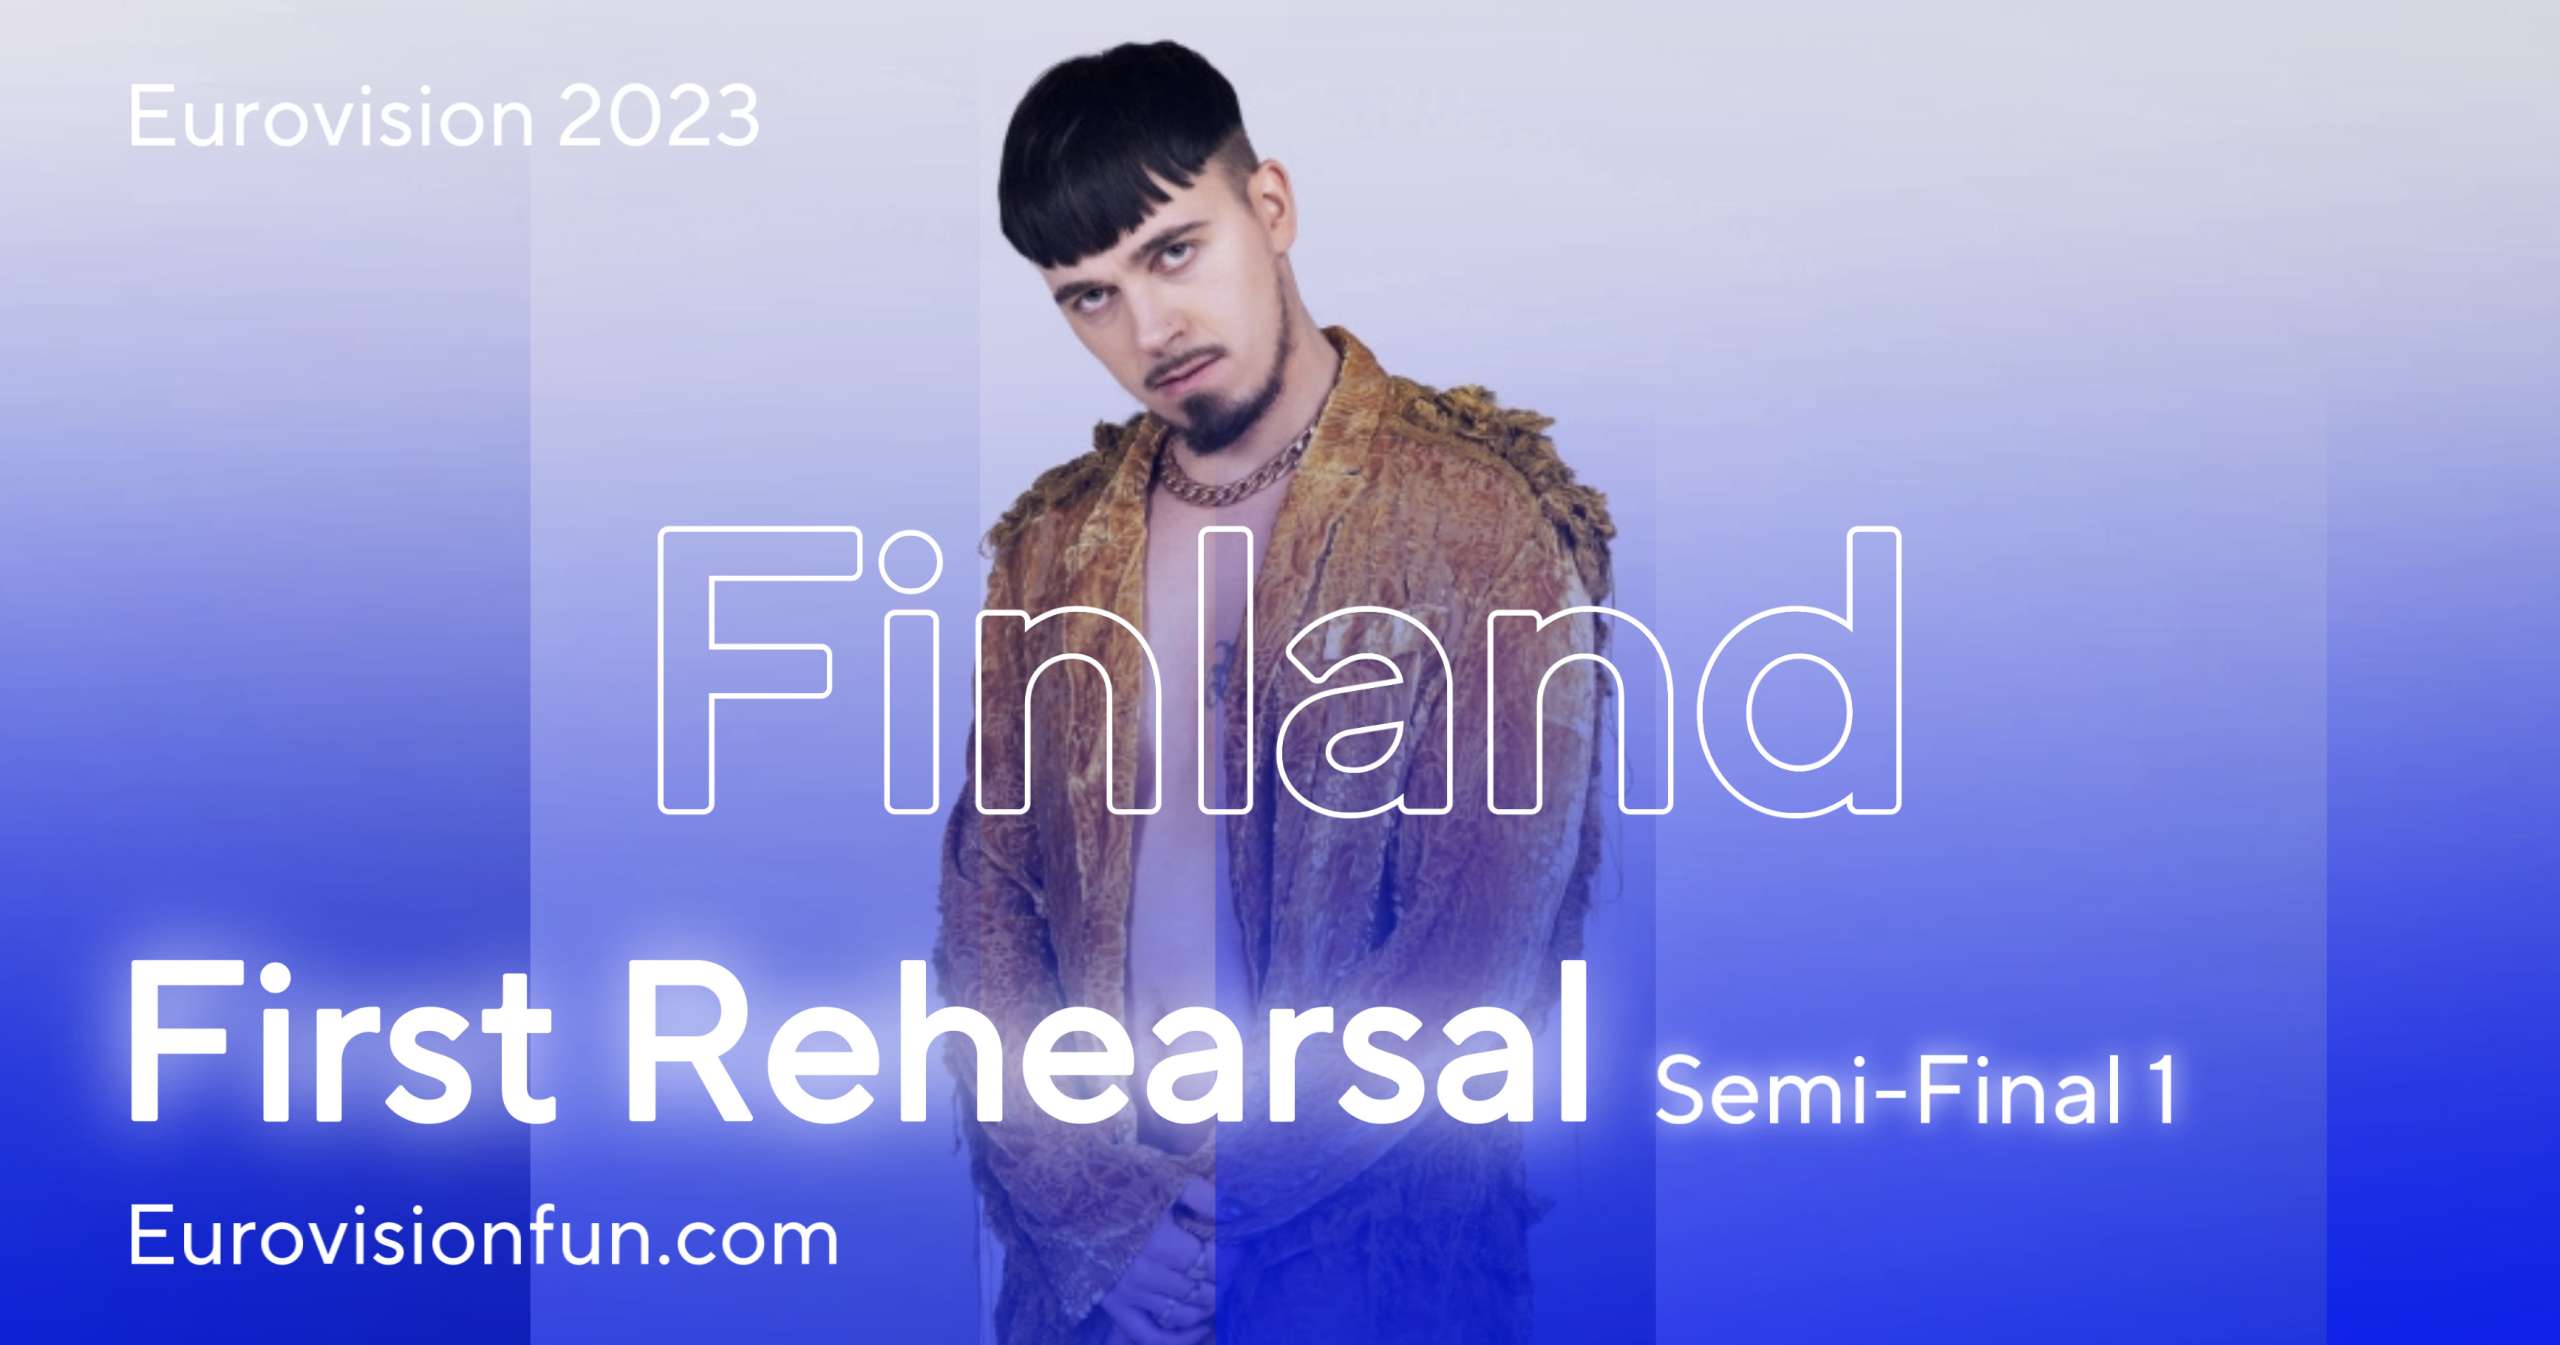 Eurovision 2023 Finnland